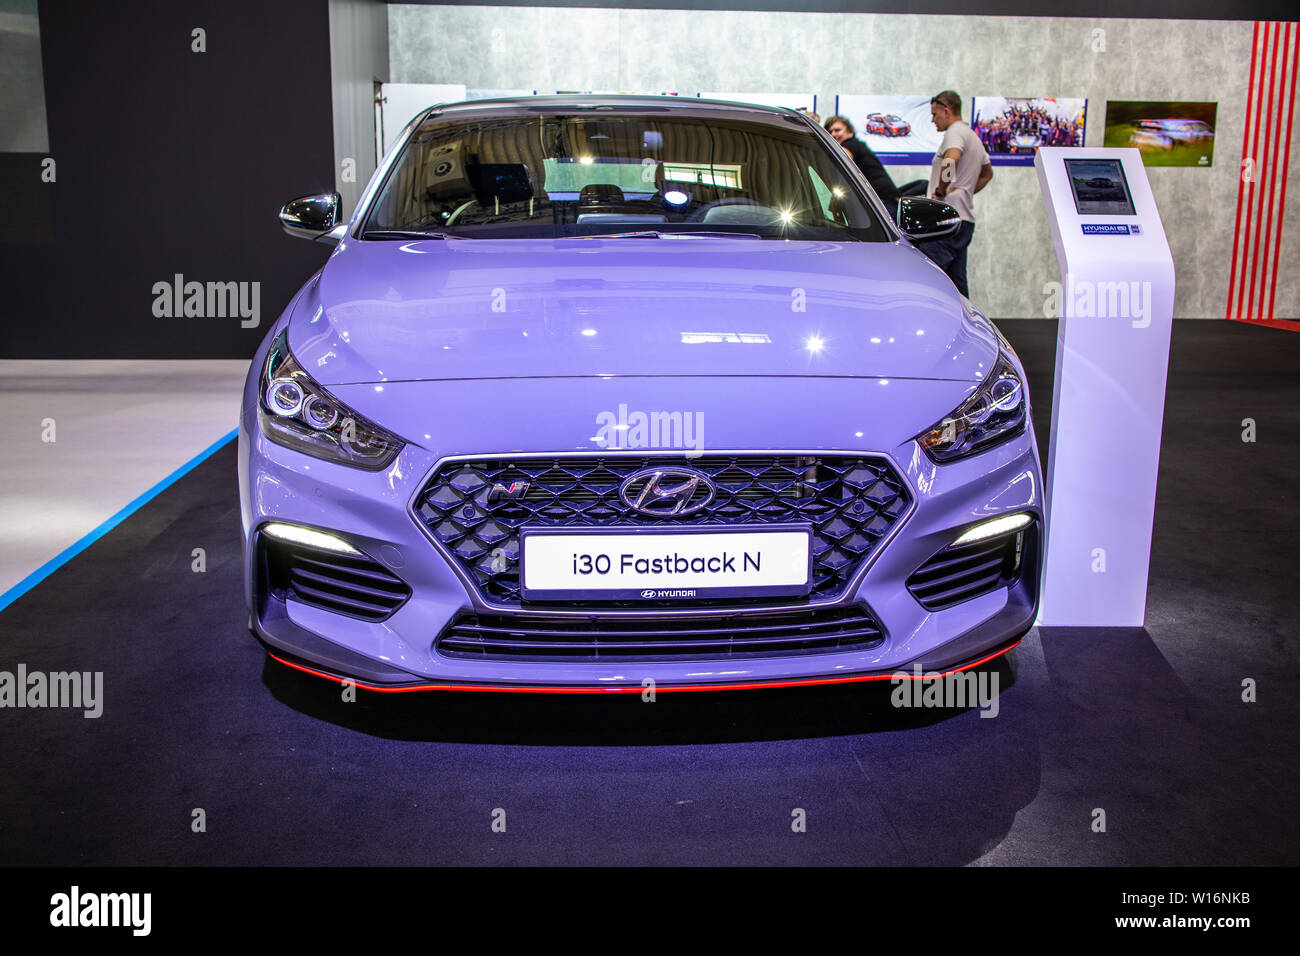 Hyundai i30 fastback hi-res stock photography and images - Alamy